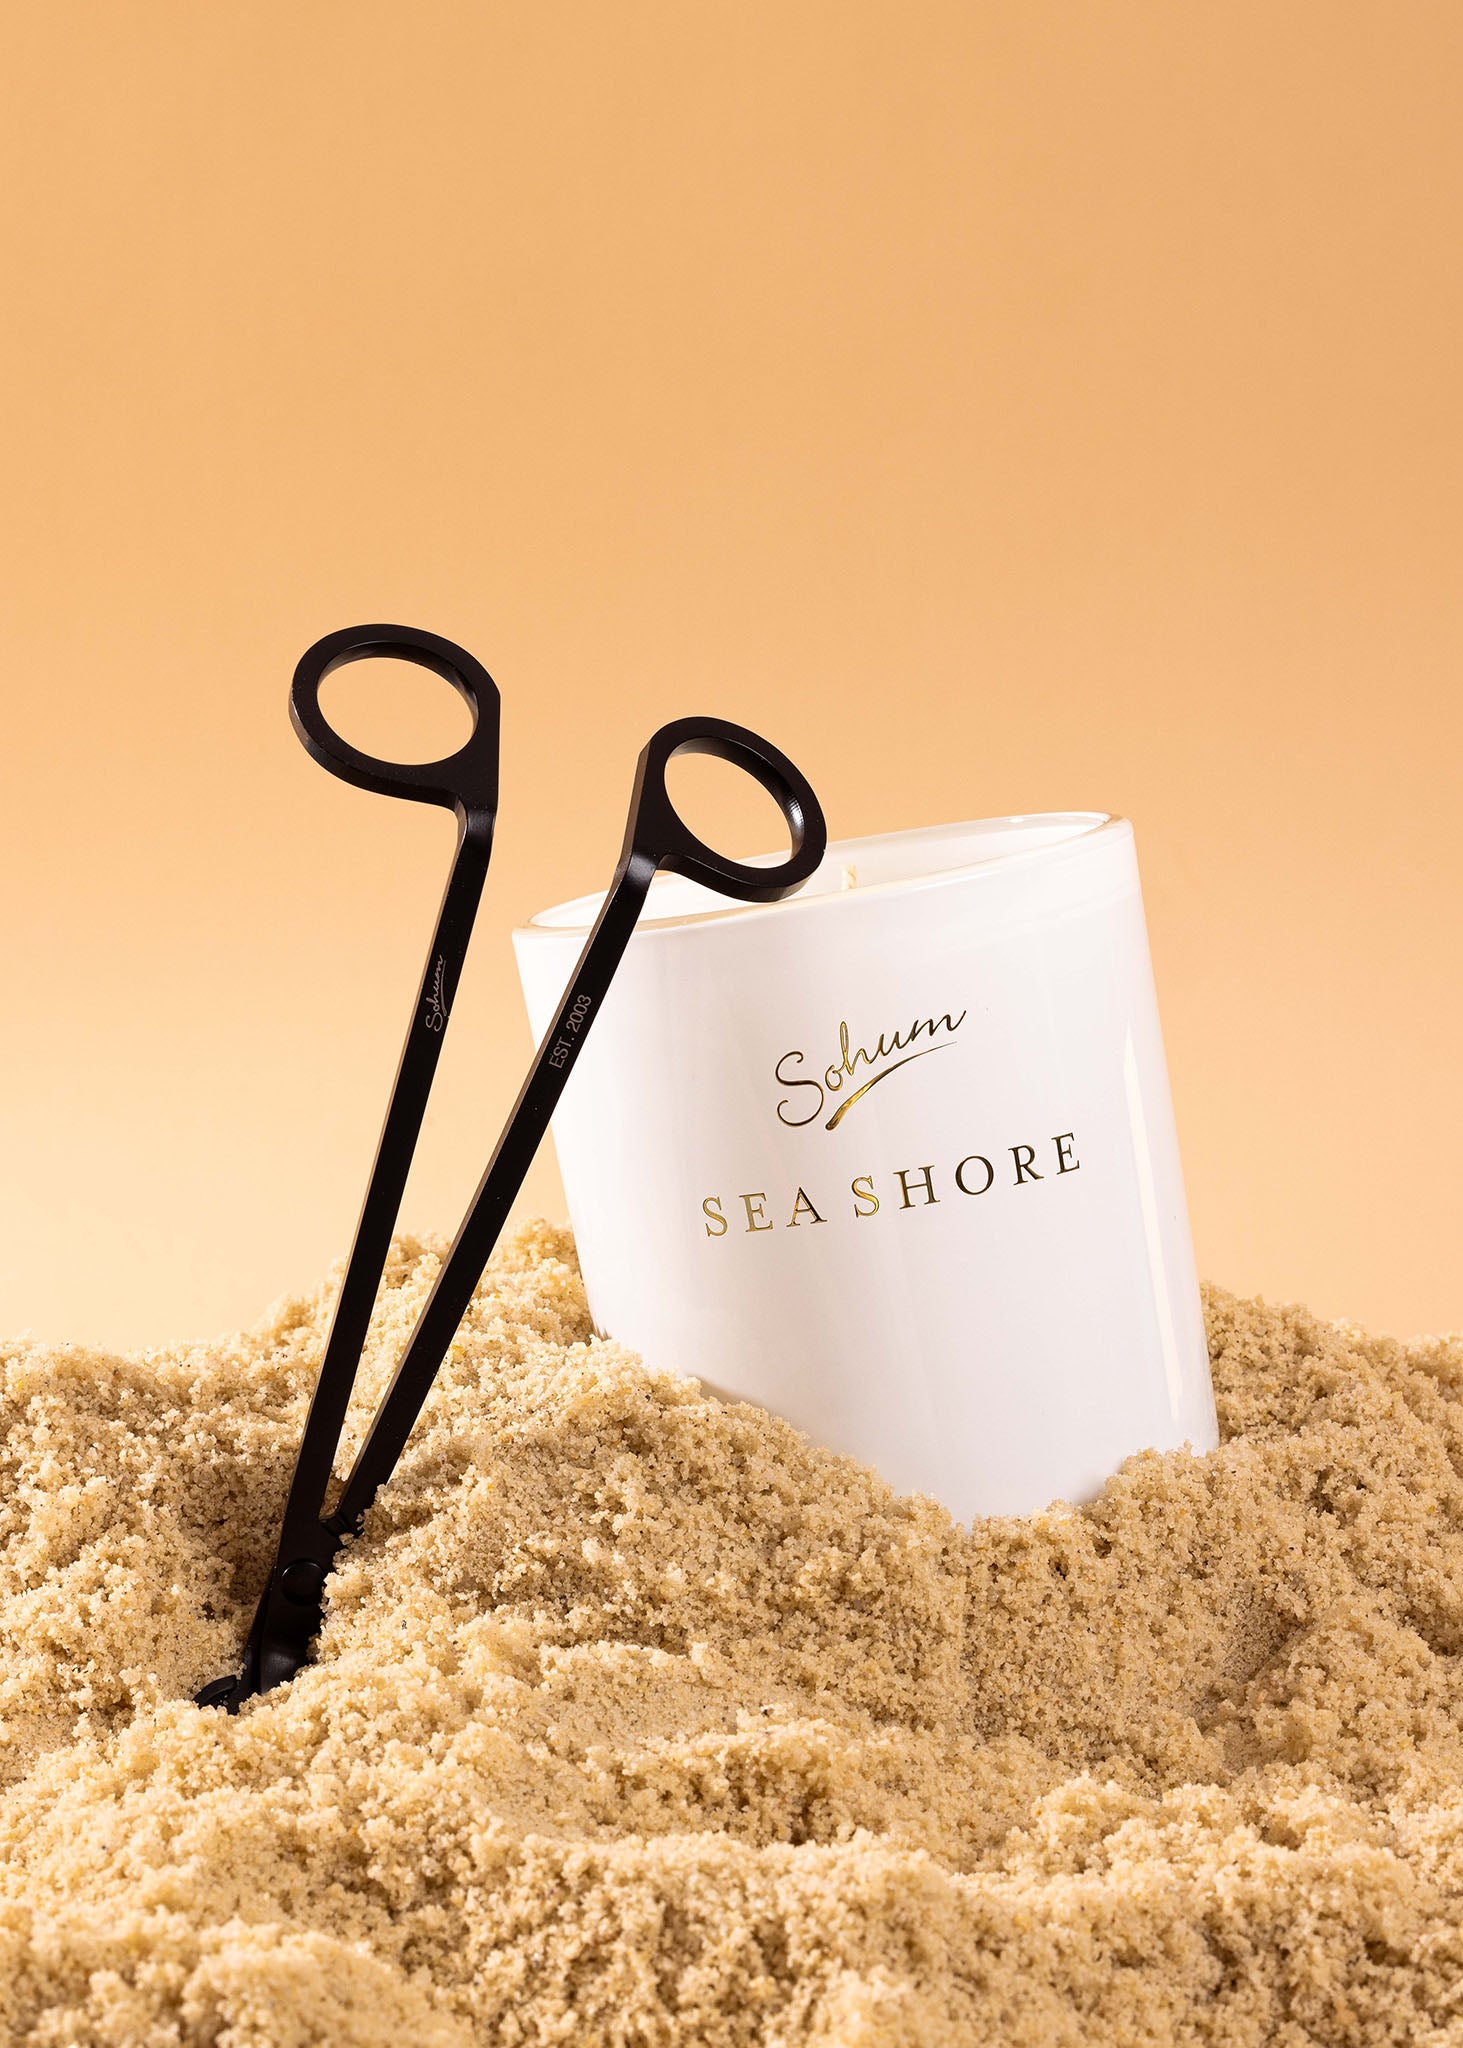 Seashore Eco Wax Candle